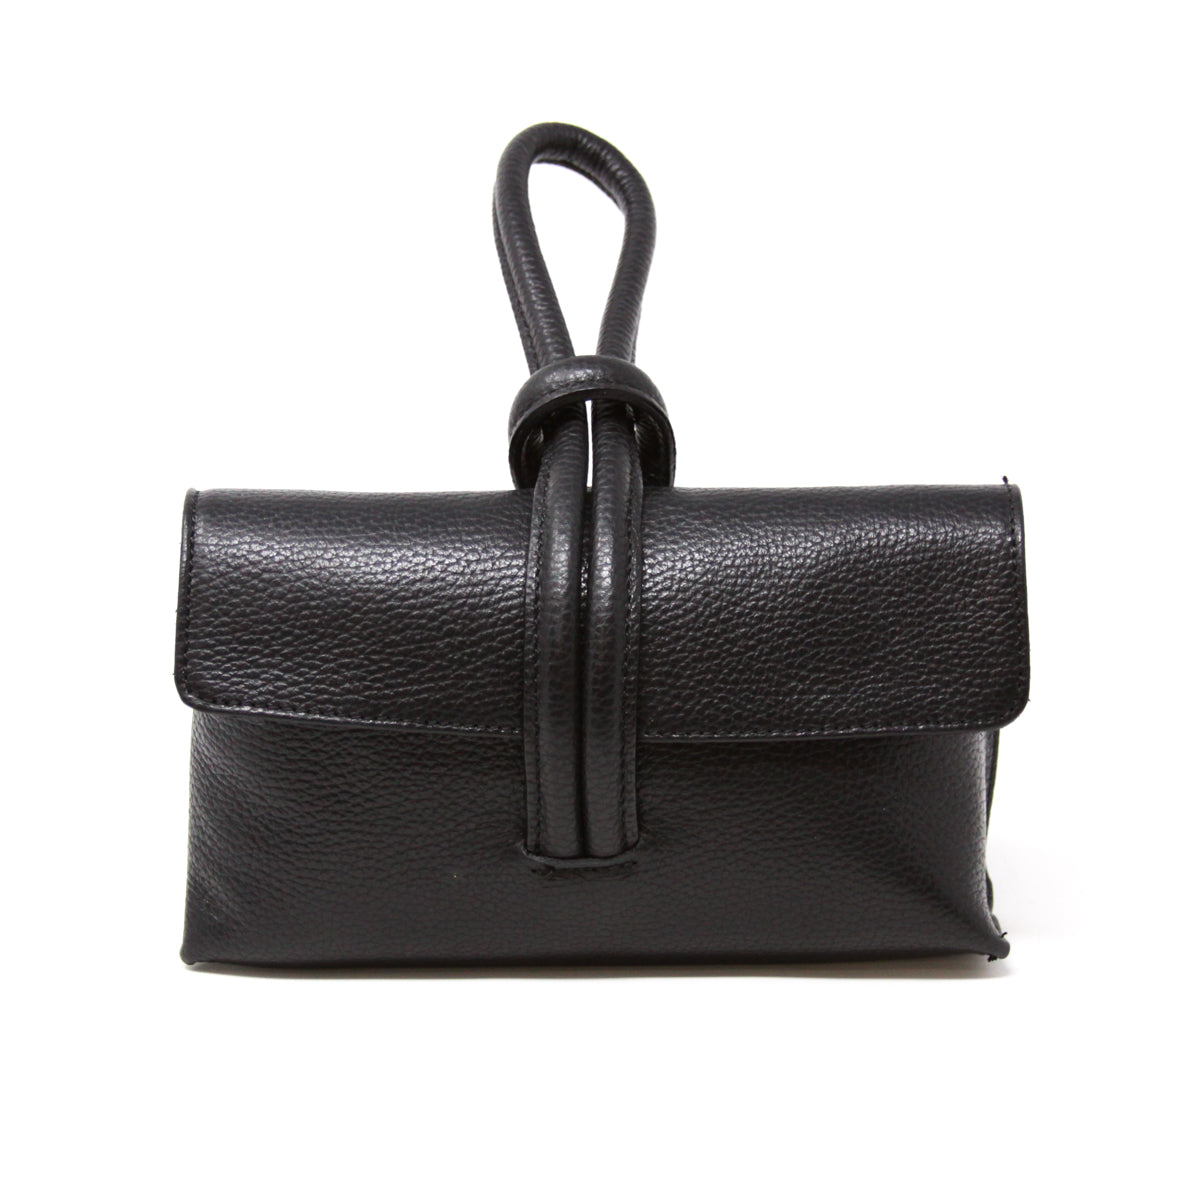 Wristlet Leather Bag